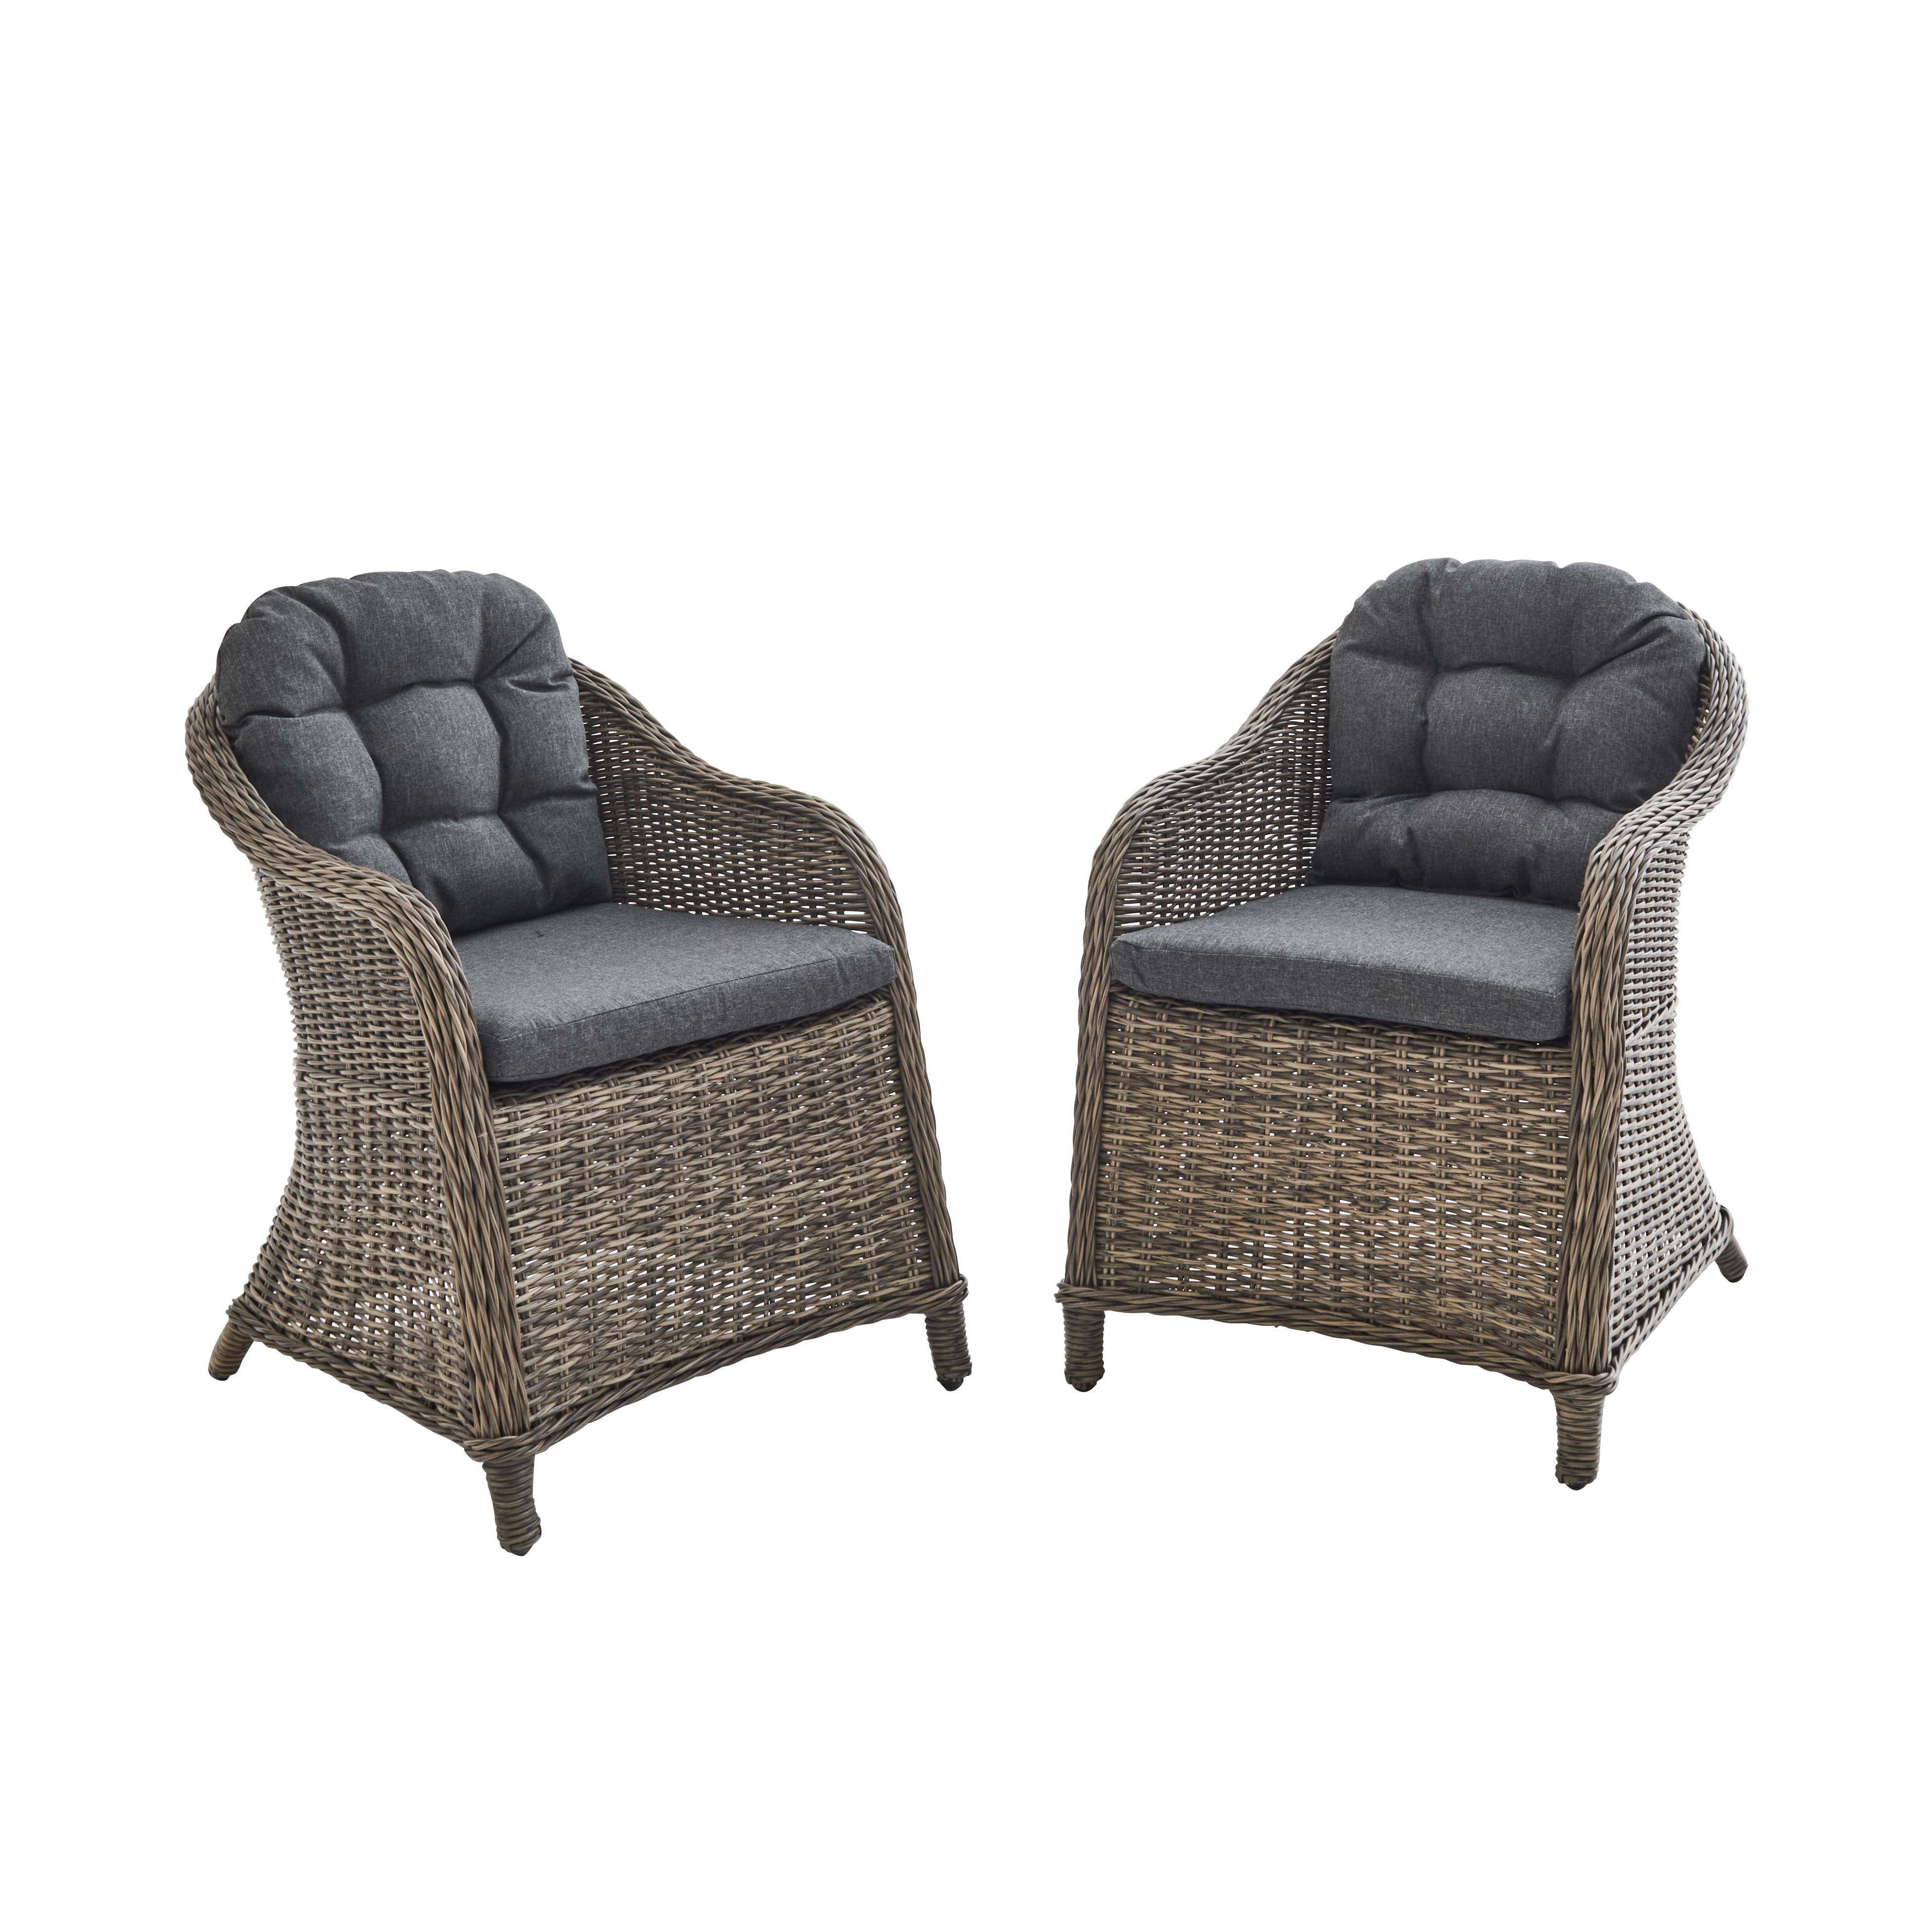 Set mit 2 runden Sesseln aus Polyrattan - Lecco Natur - anthrazitfarbene Kissen, Stühle, Aluminiumgestell Photo1